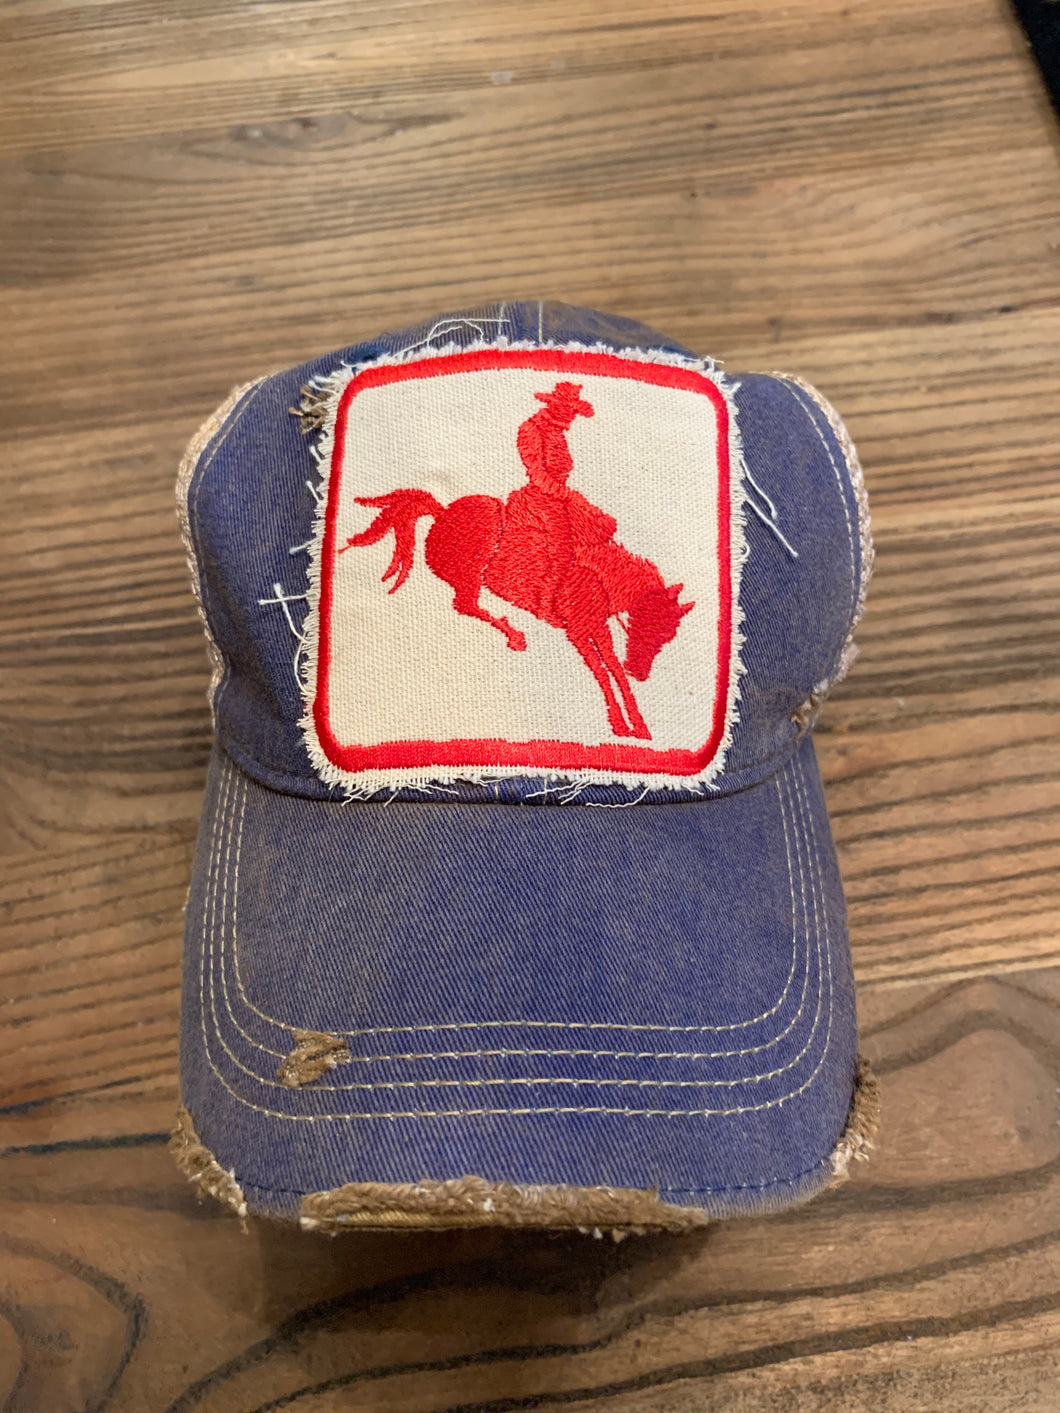 Red Cowboy on vintage blue distressed hat